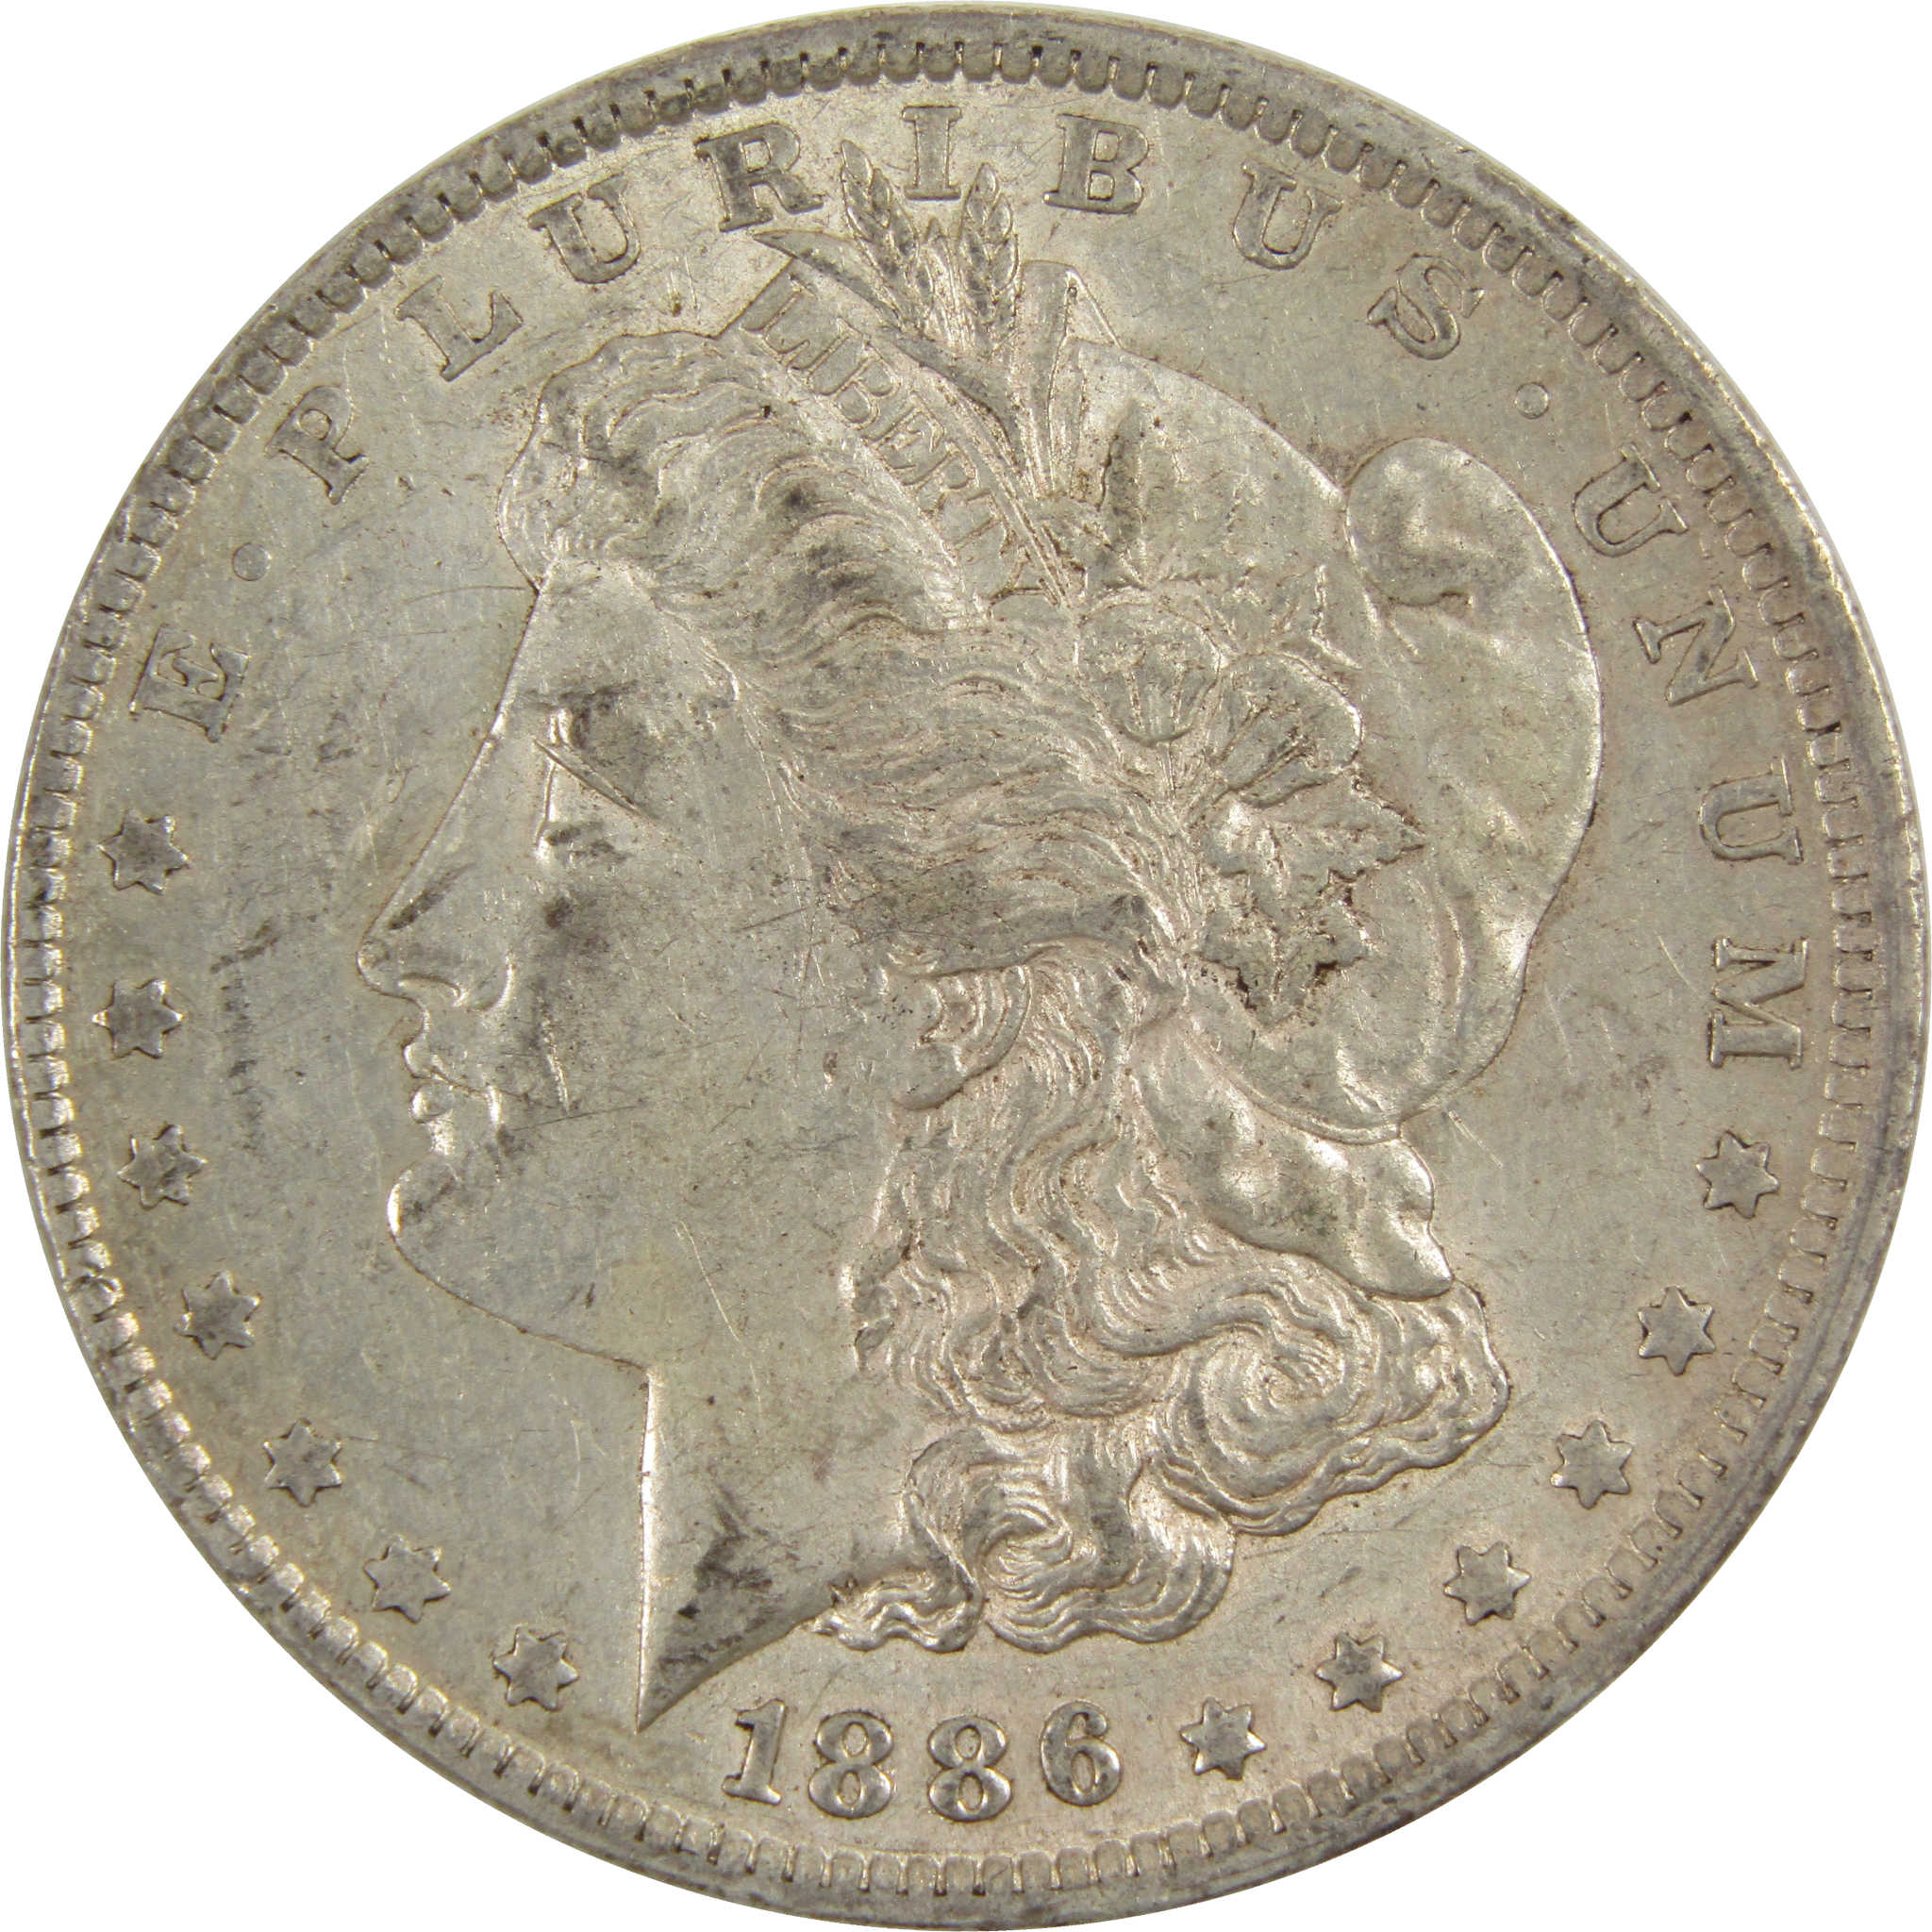 1886 O Morgan Dollar Borderline Uncirculated 90% Silver $1 SKU:I8088 - Morgan coin - Morgan silver dollar - Morgan silver dollar for sale - Profile Coins &amp; Collectibles